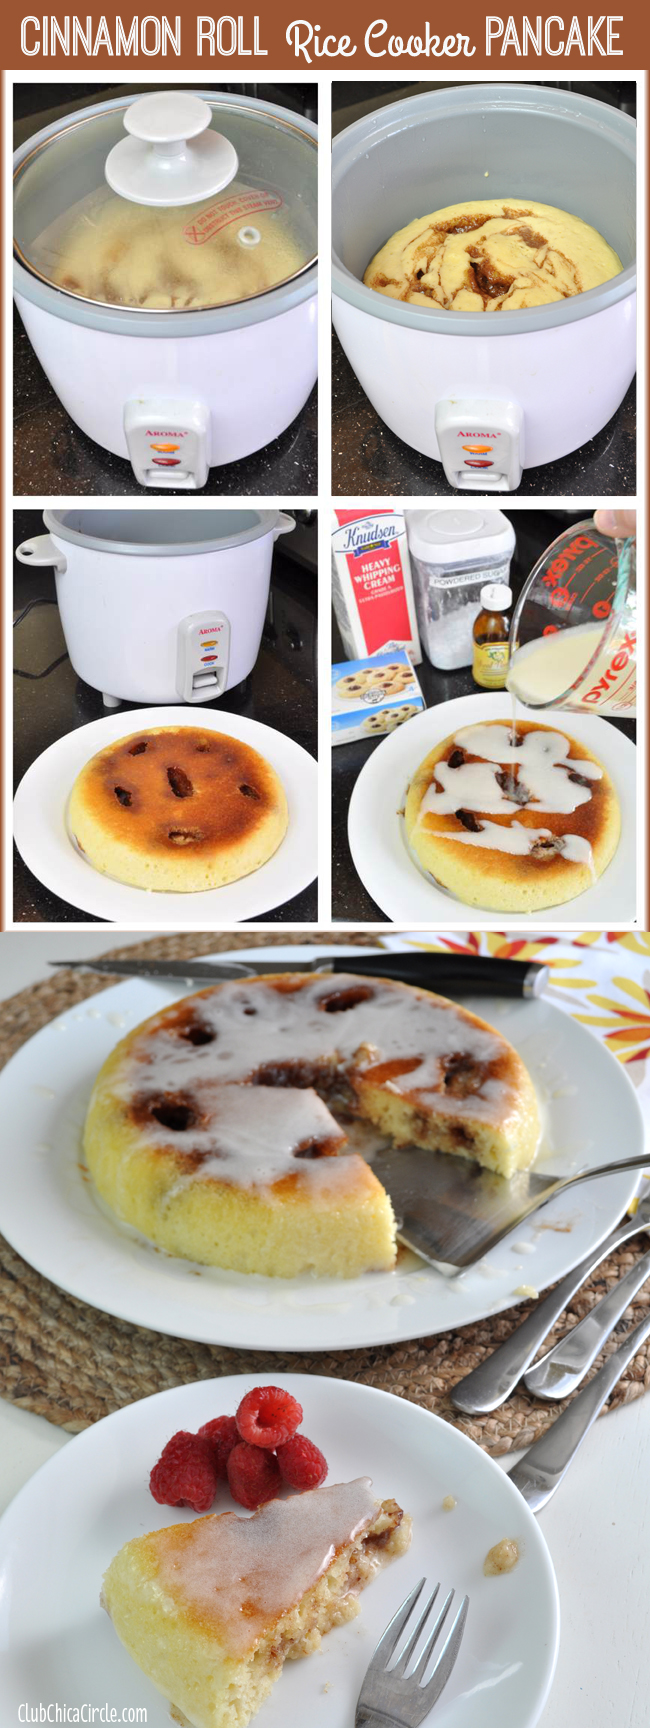 Cinnanon Roll Rice Cooker Pancake Easy Recipe Idea